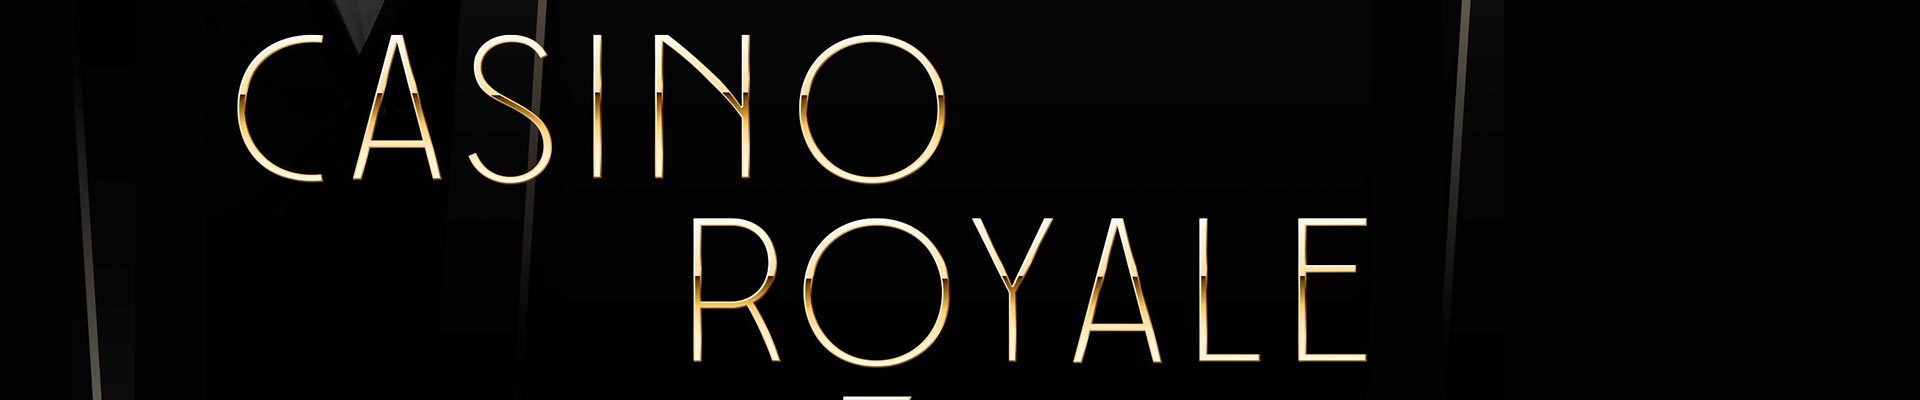 Avera Queen of Peace Gala: Casino Royale Sponsors - Avera ...